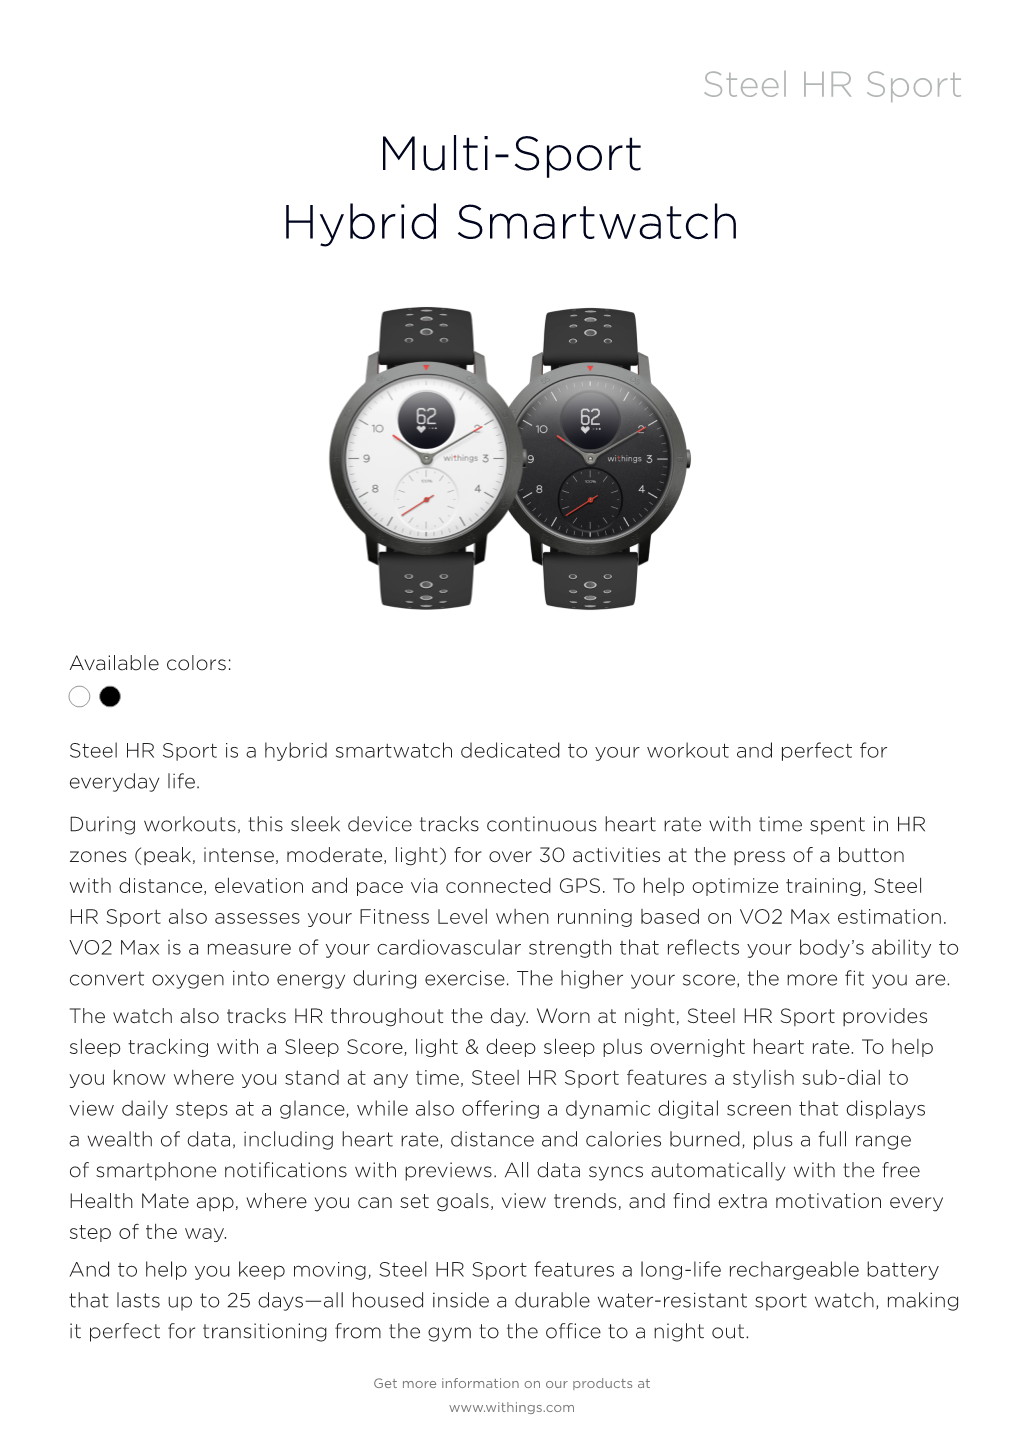 Multi-Sport Hybrid Smartwatch